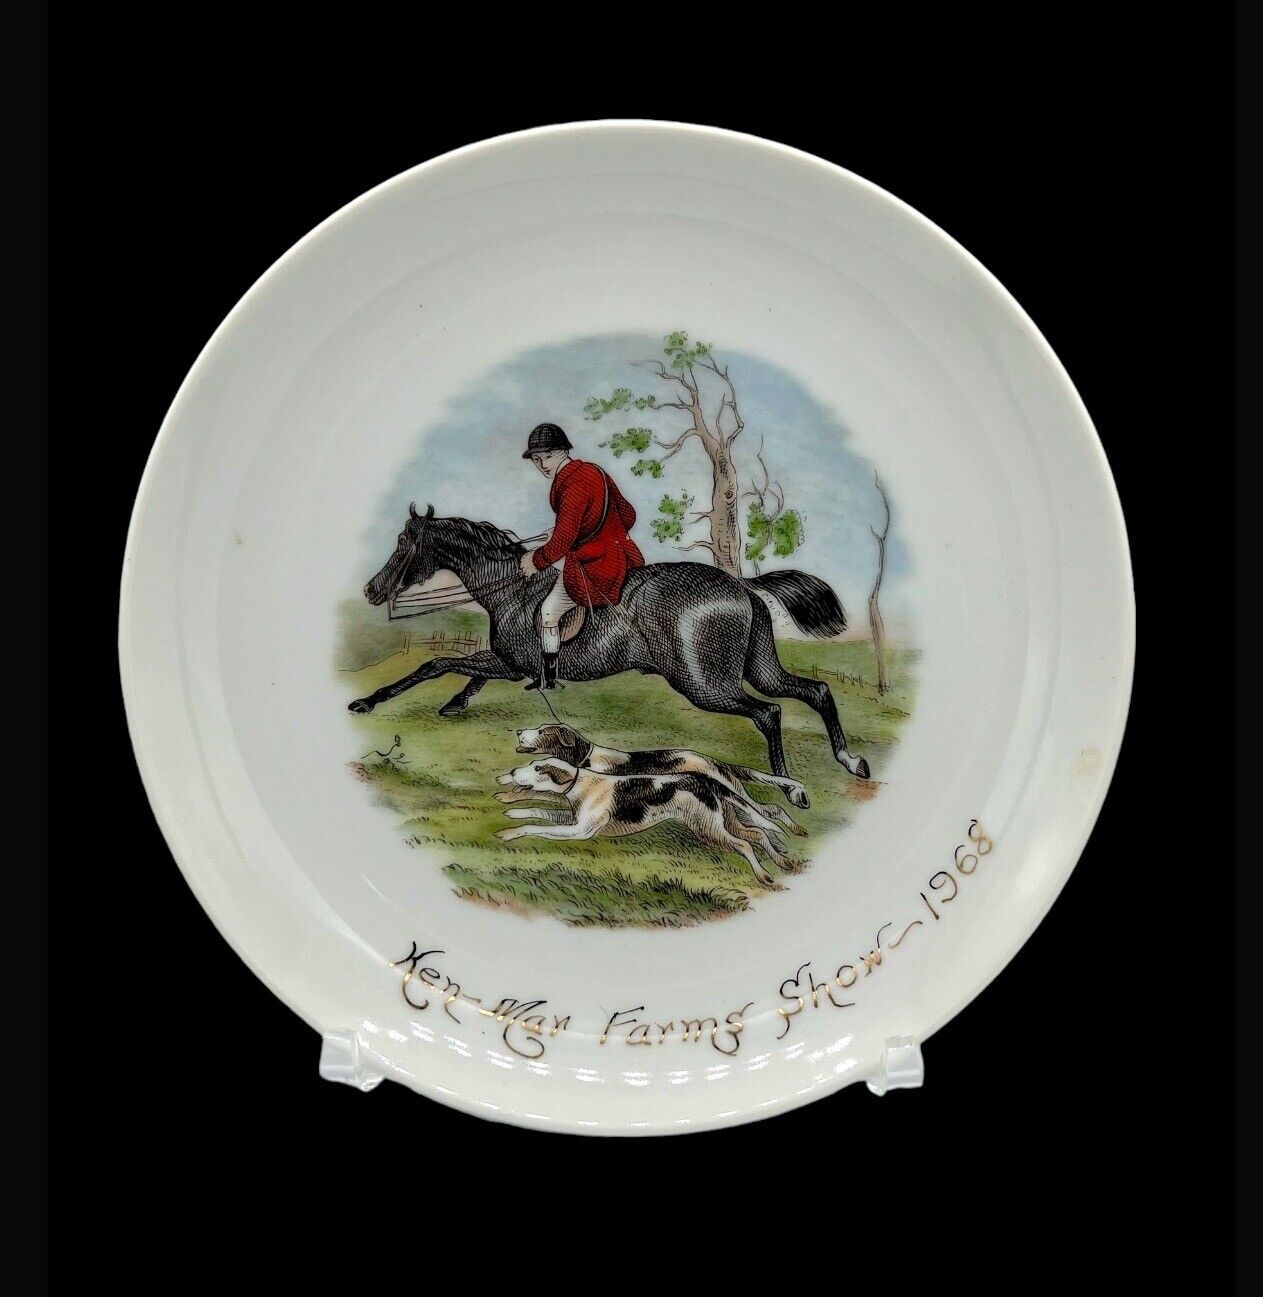 Vintage 1968 Horse Show Winners Plate by artist H. D. Ammerman